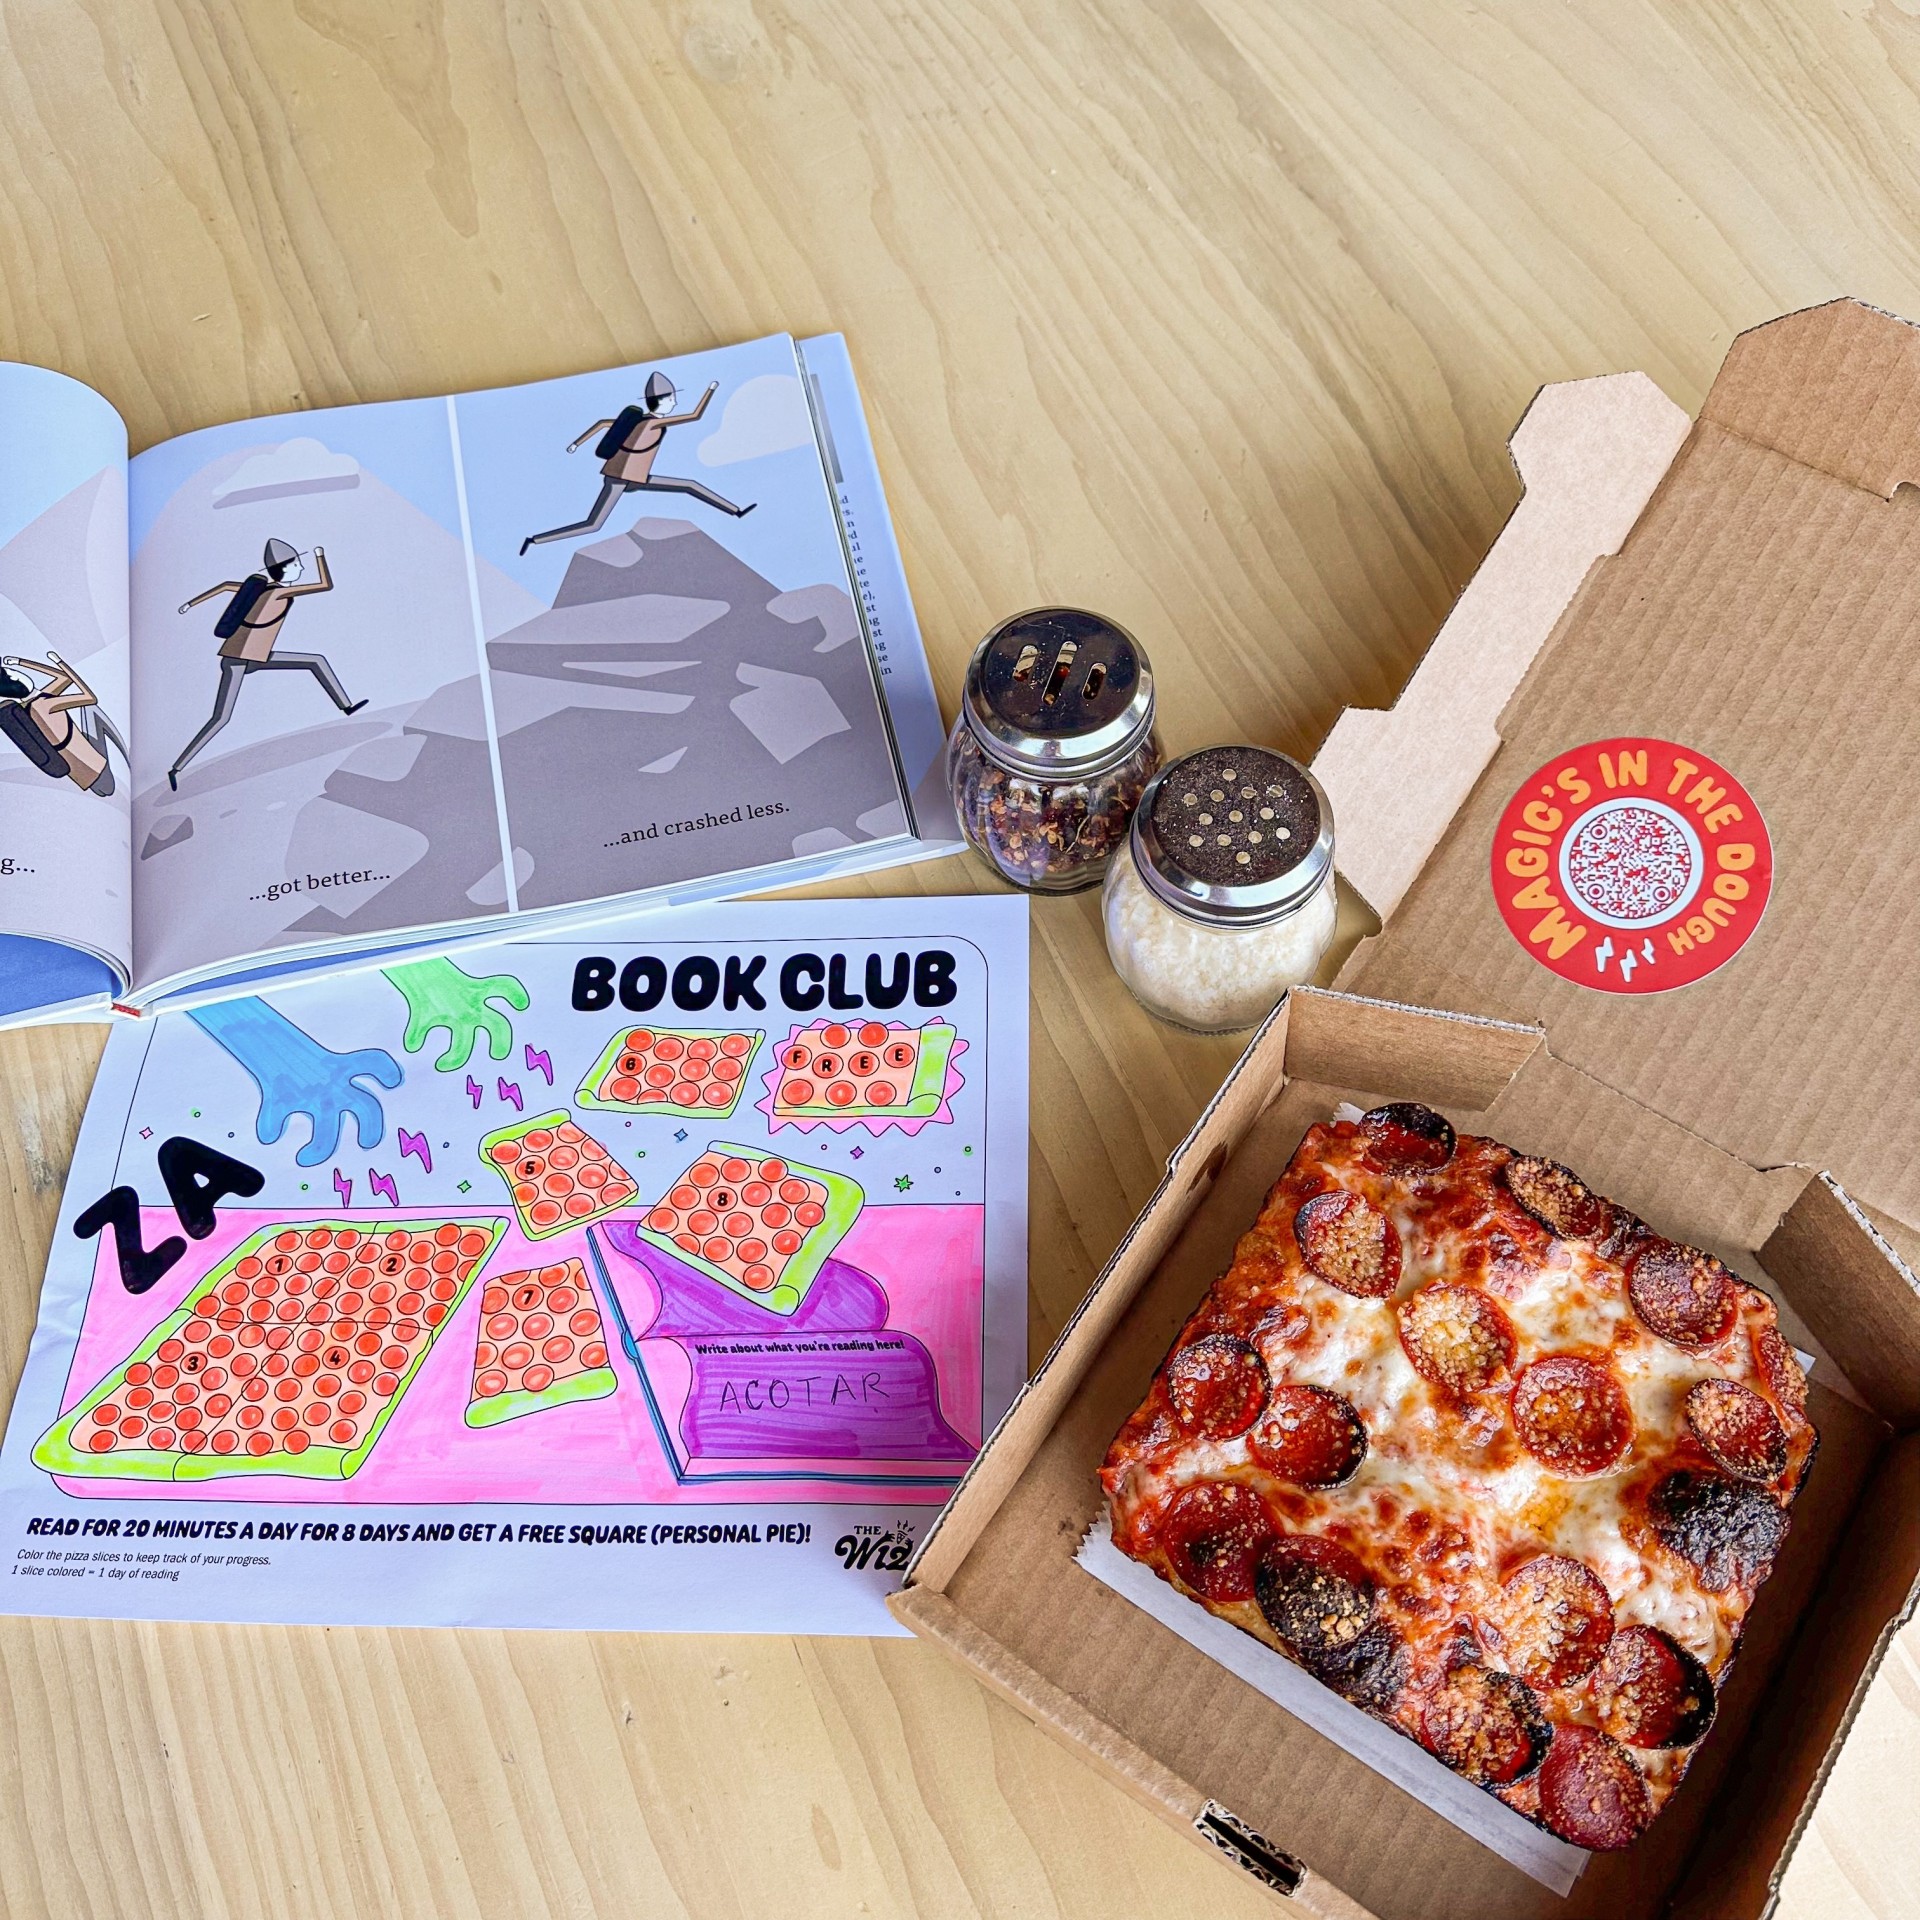 Pizza Hut on X: Get the Big Dinner Box. Check that box. Then grab